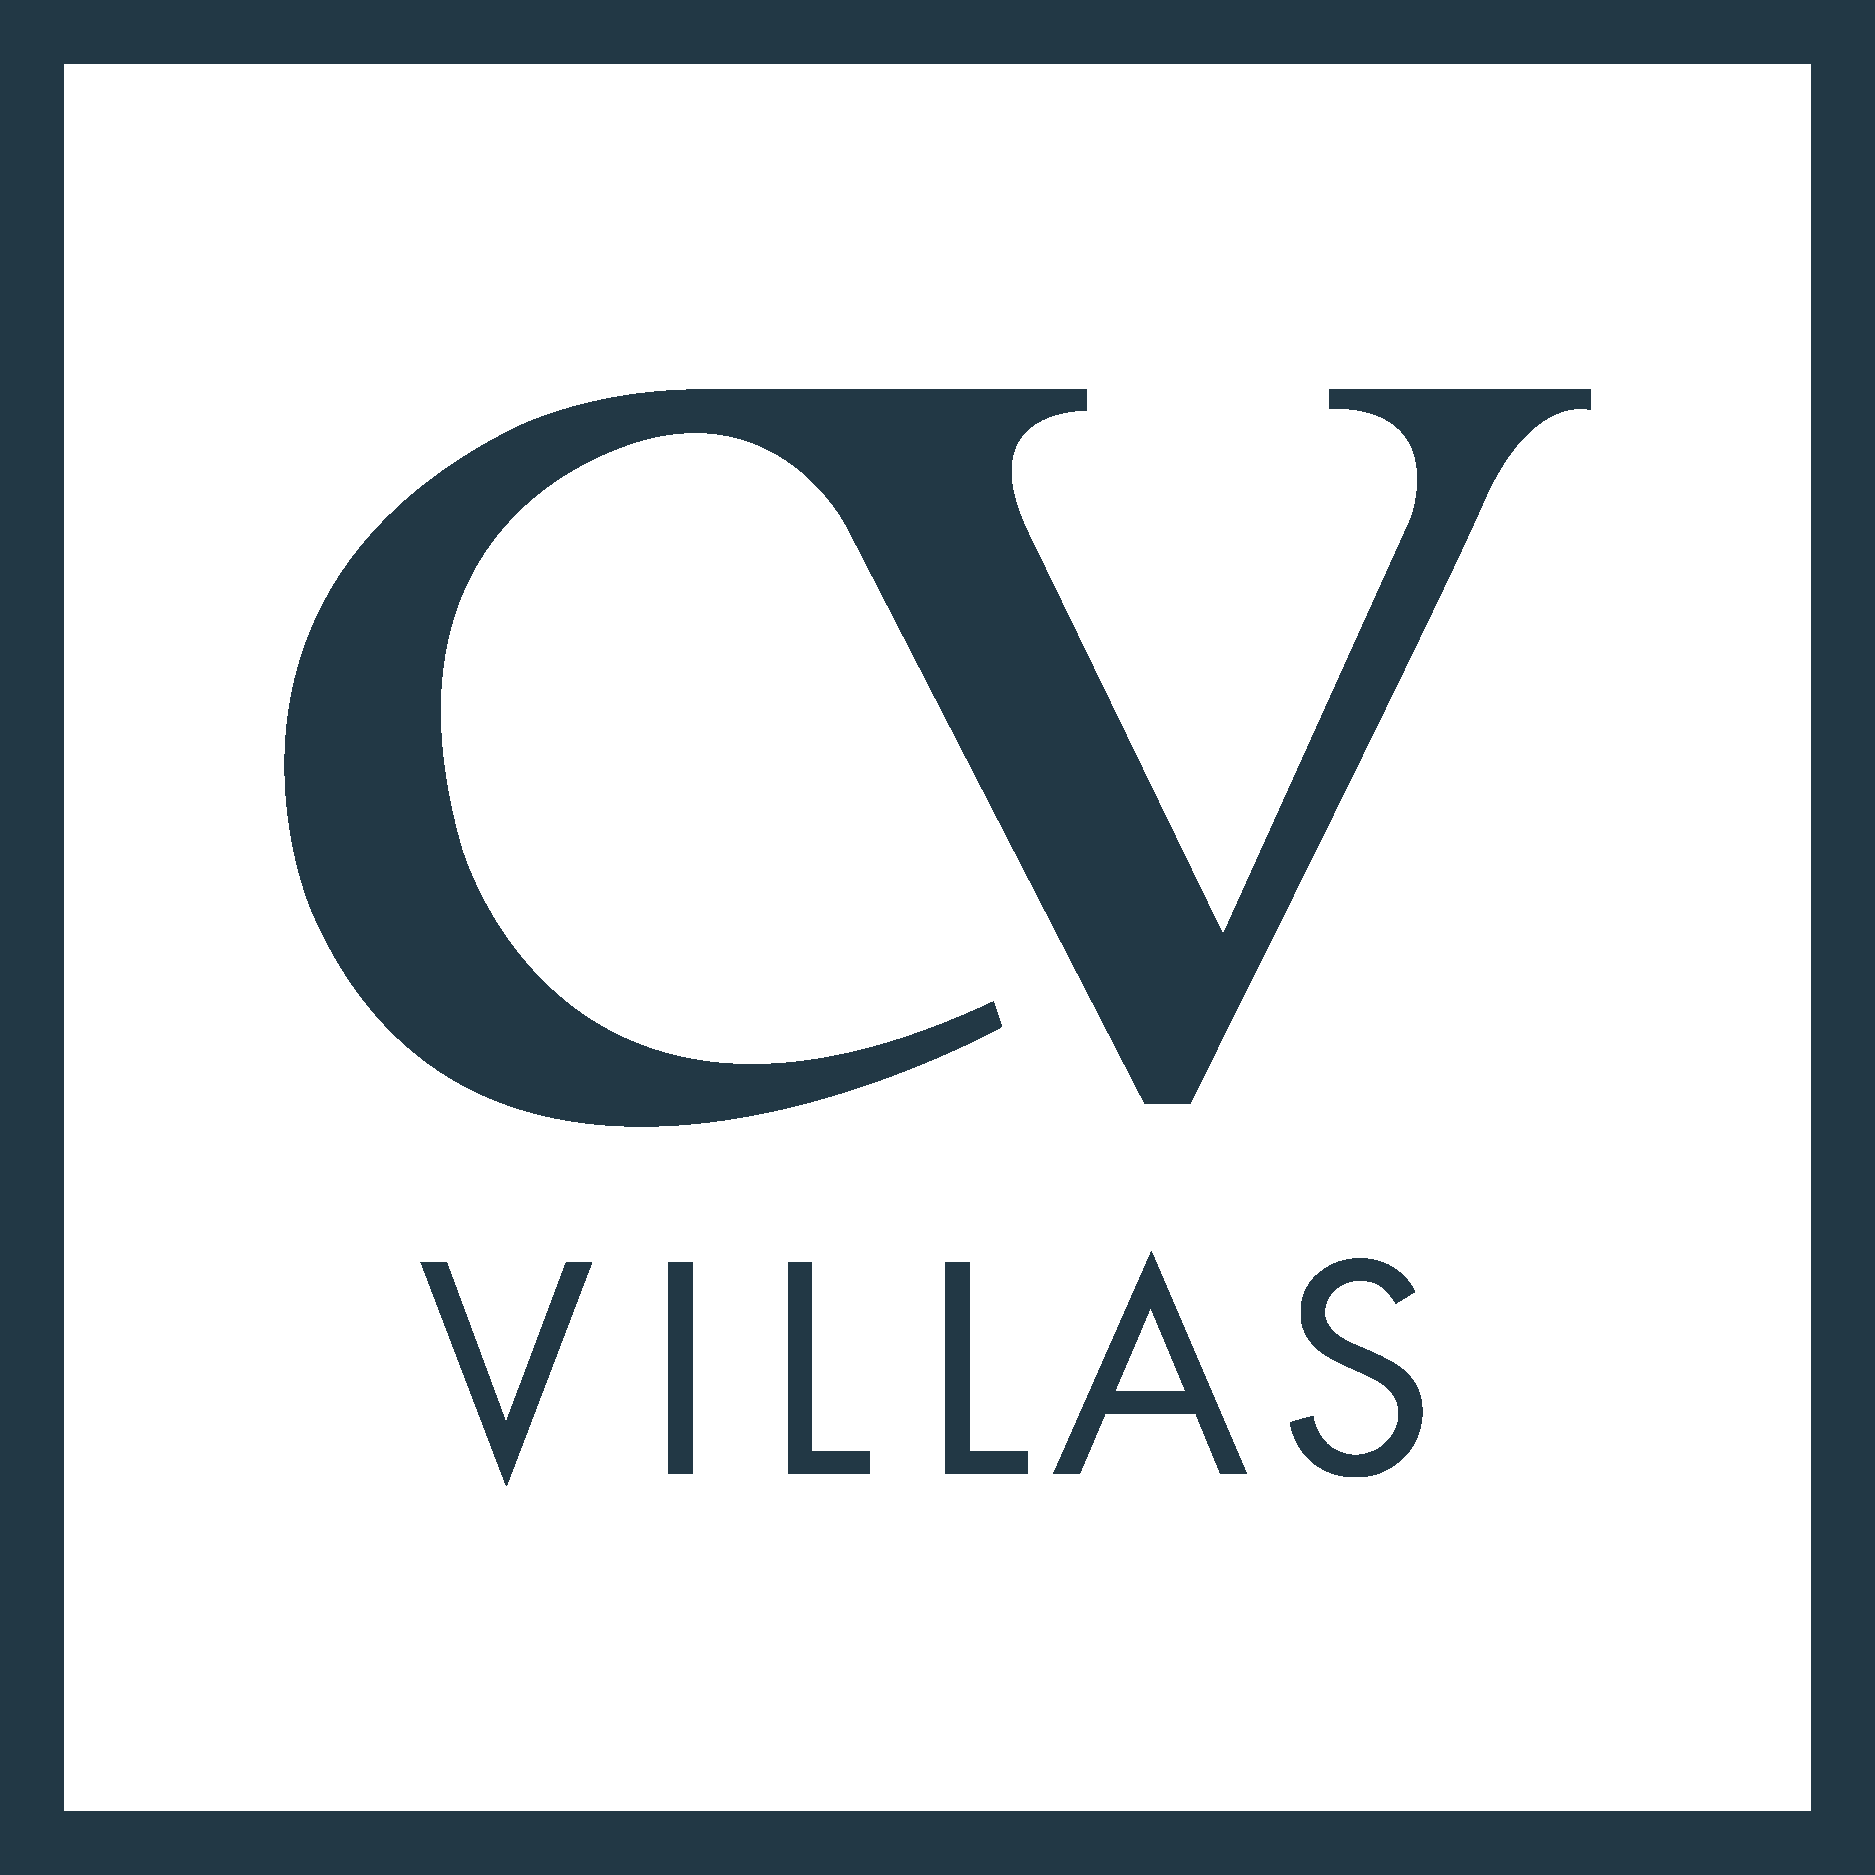 CV Villas Logo Vector